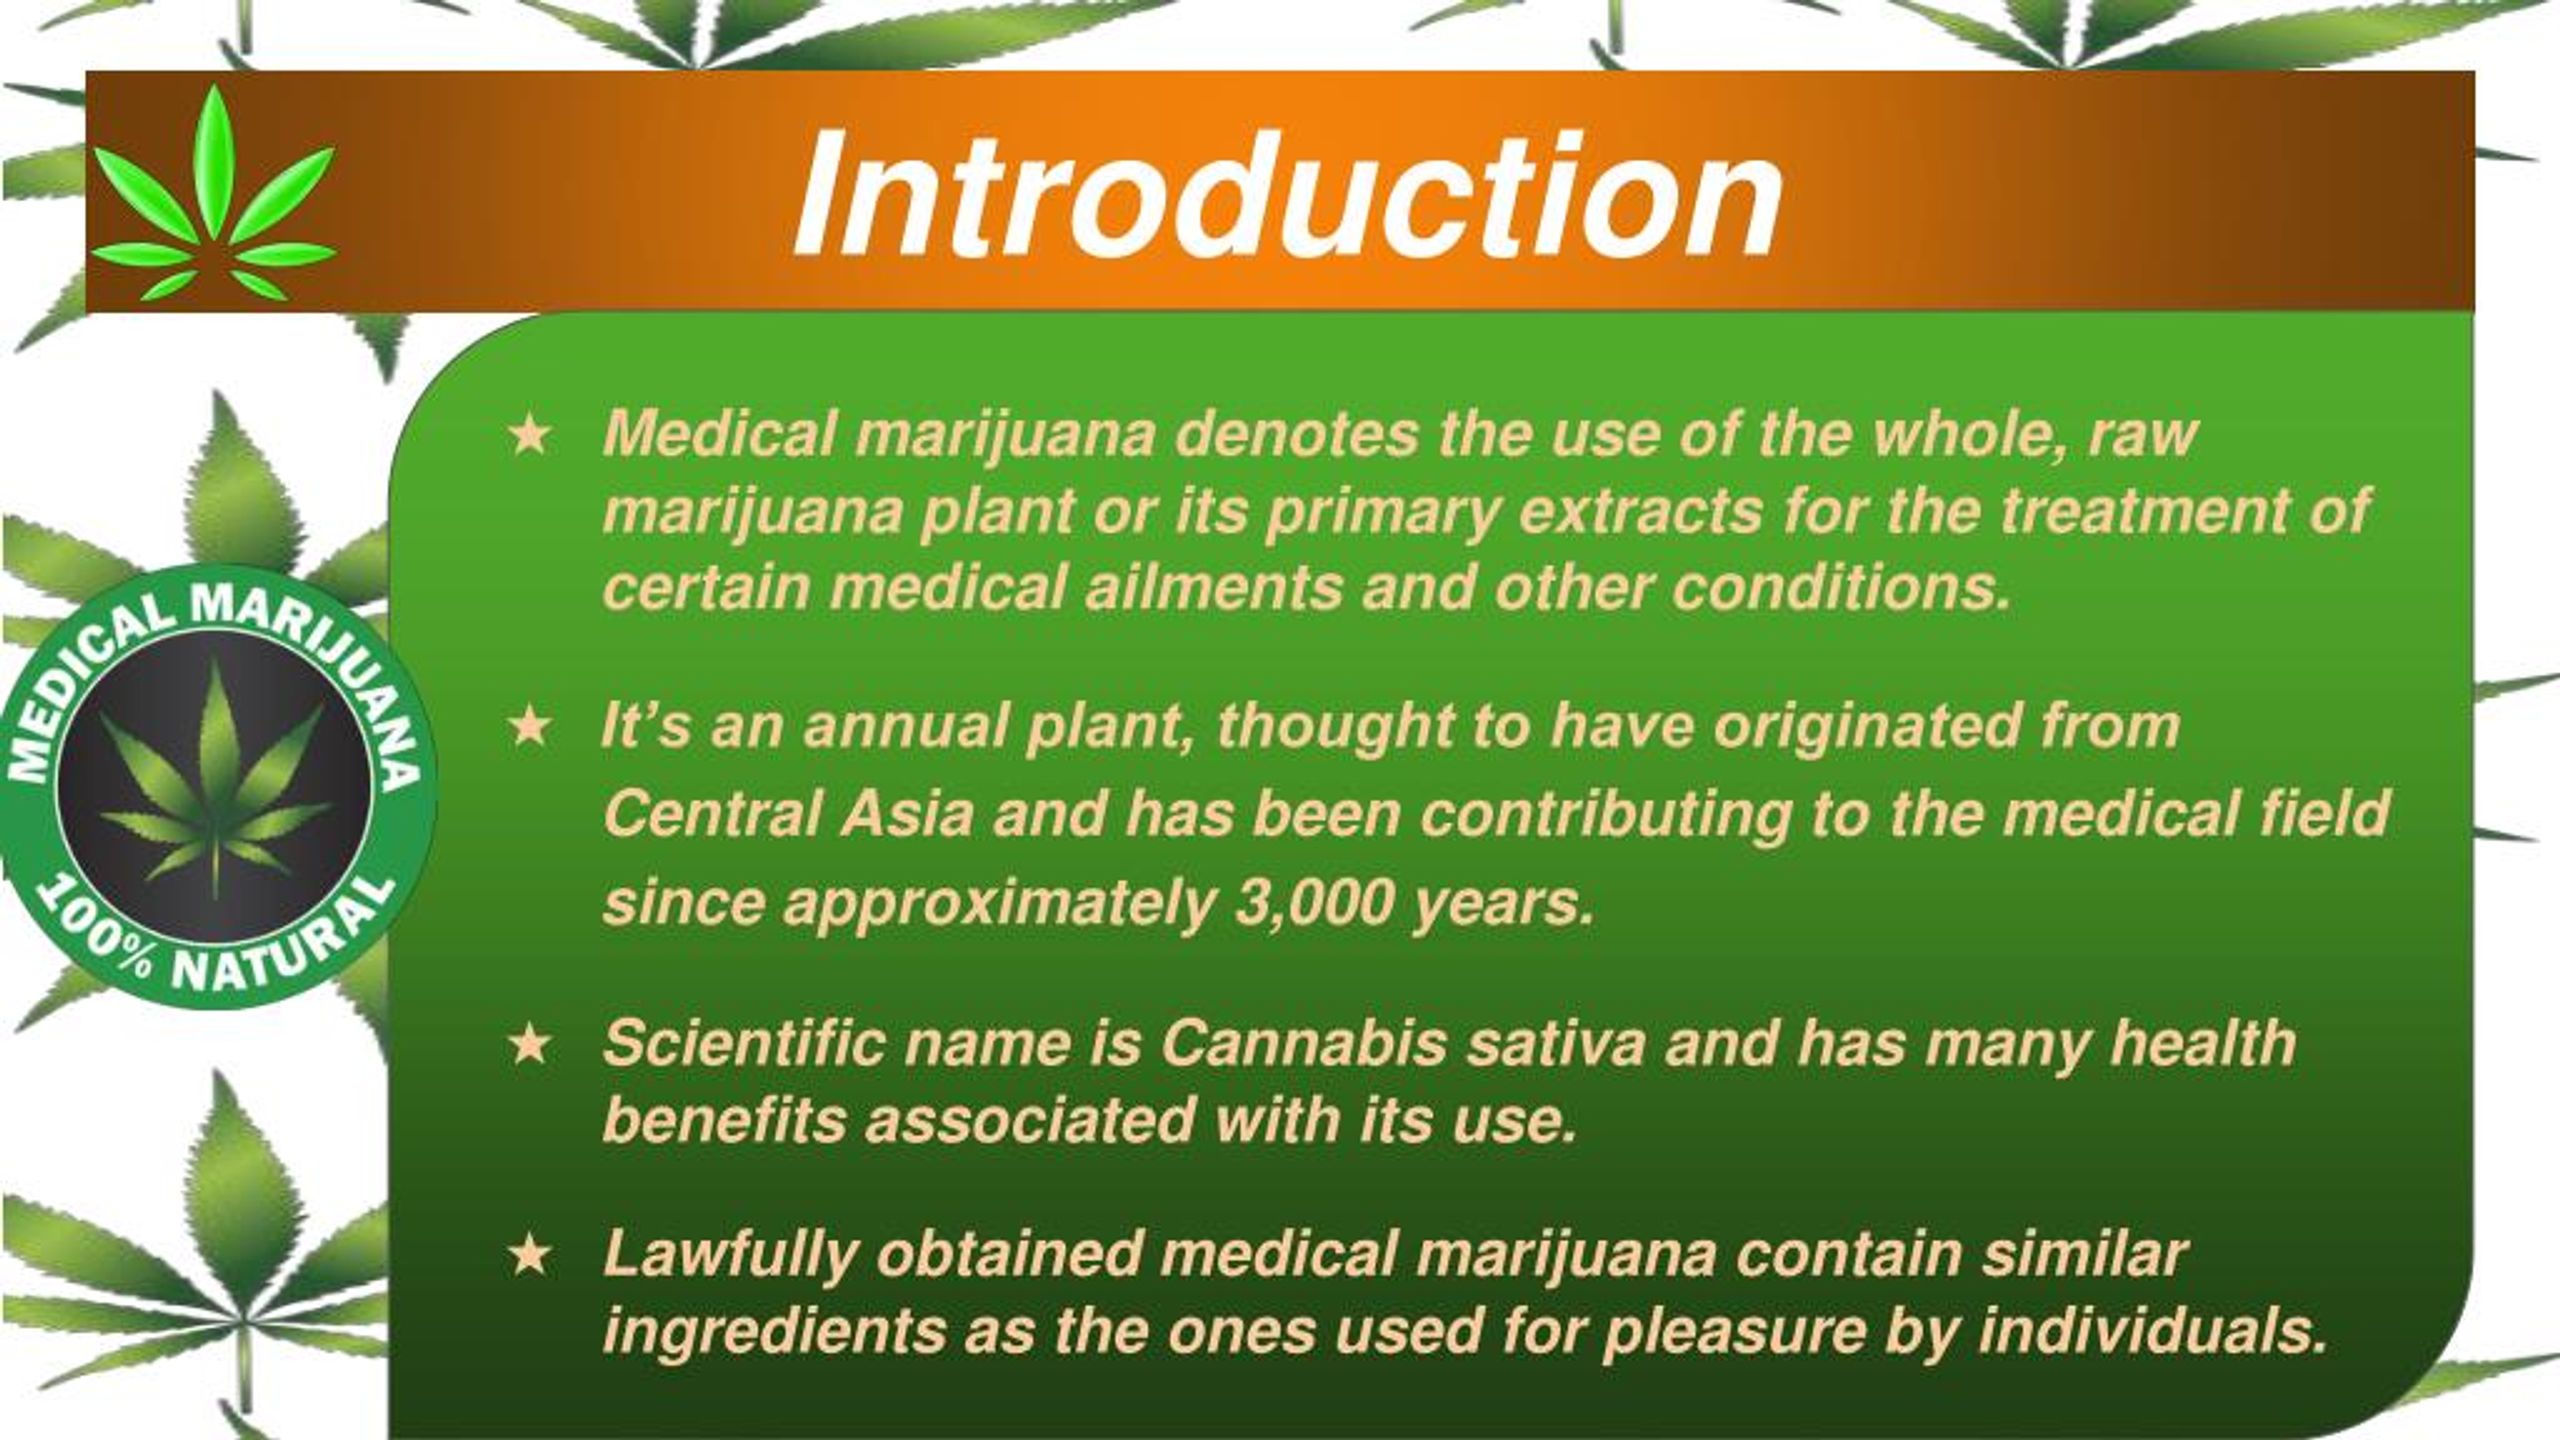 medical marijuana essay introduction